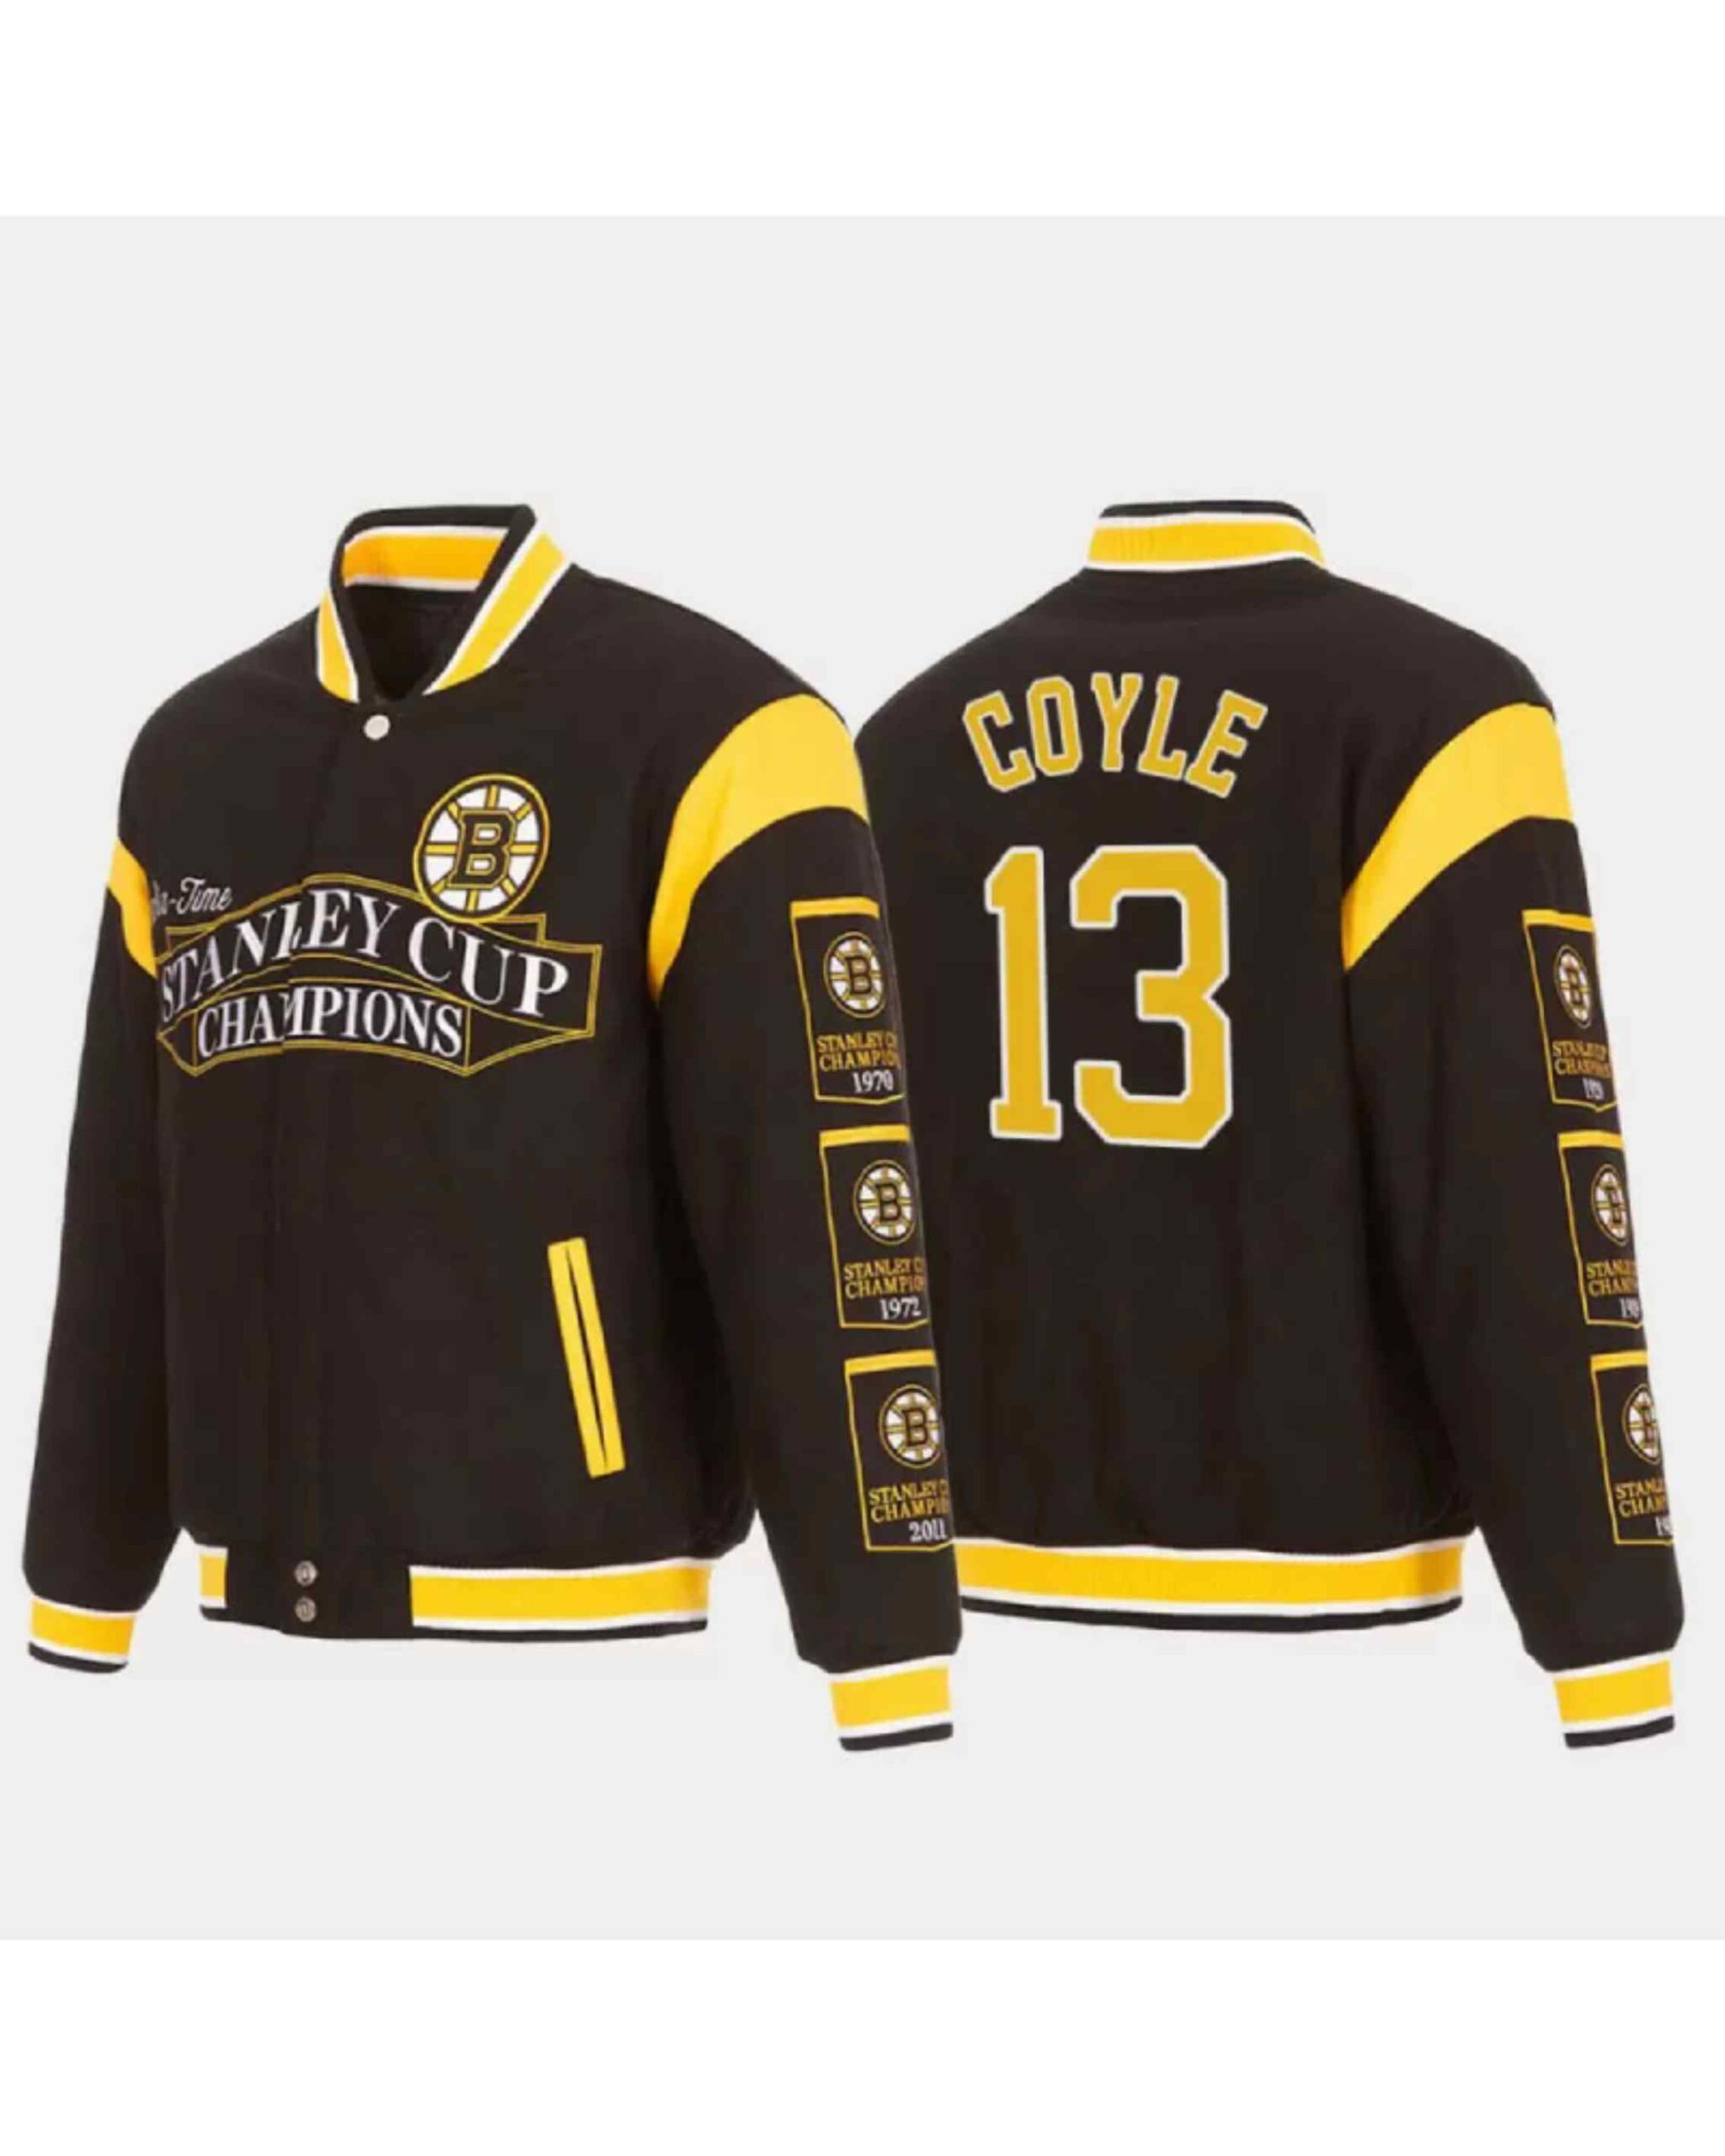 https://lajacket.com/wp-content/uploads/2022/12/boston-bruins-13-coyle-stanley-cup-champion-jacket-scaled.jpg